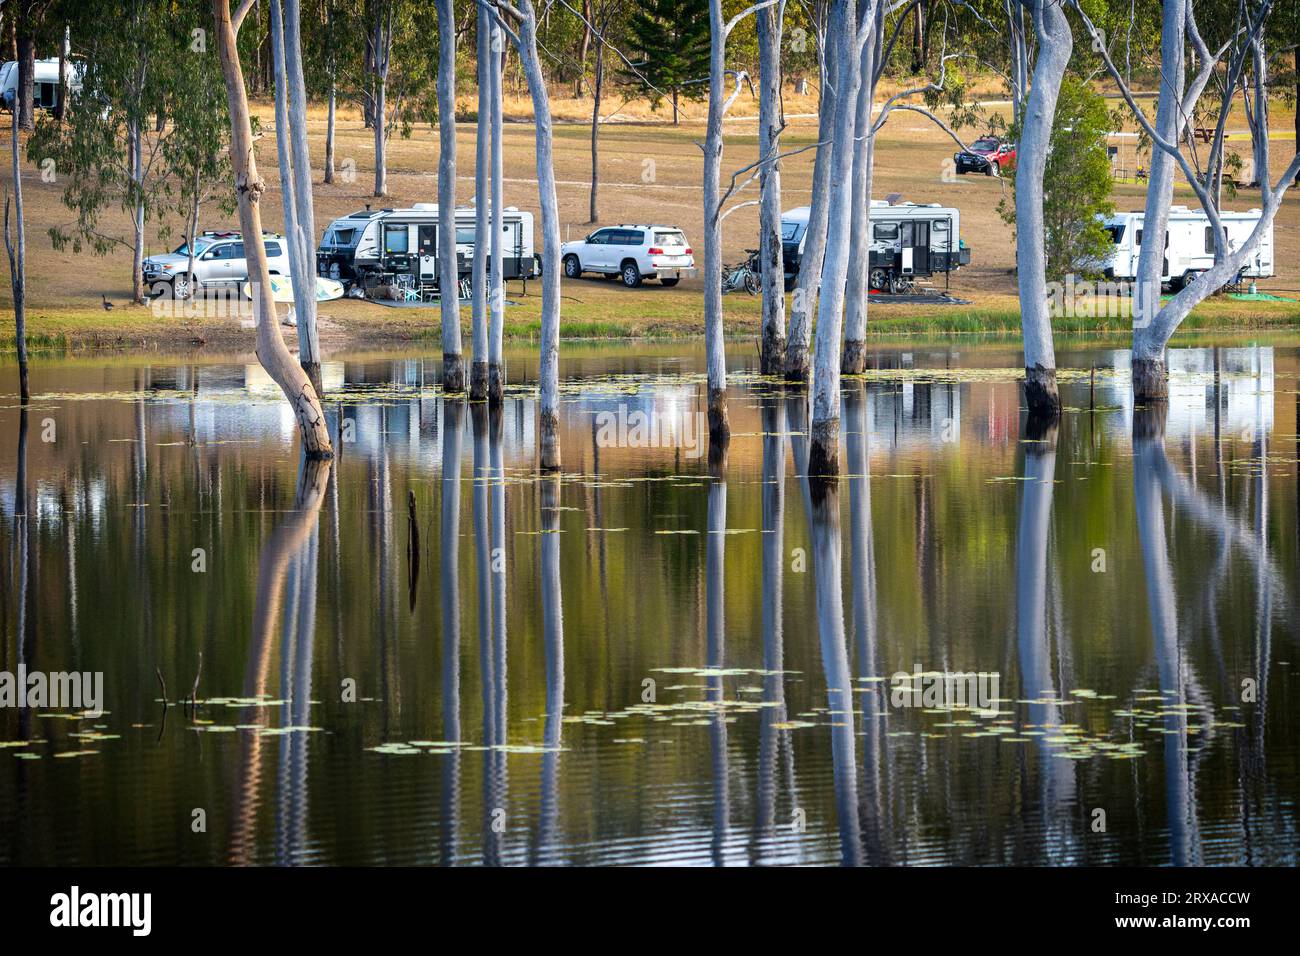 Caravans camping on backs of freshwater dam, Childers, Queensland Australia Stock Photo